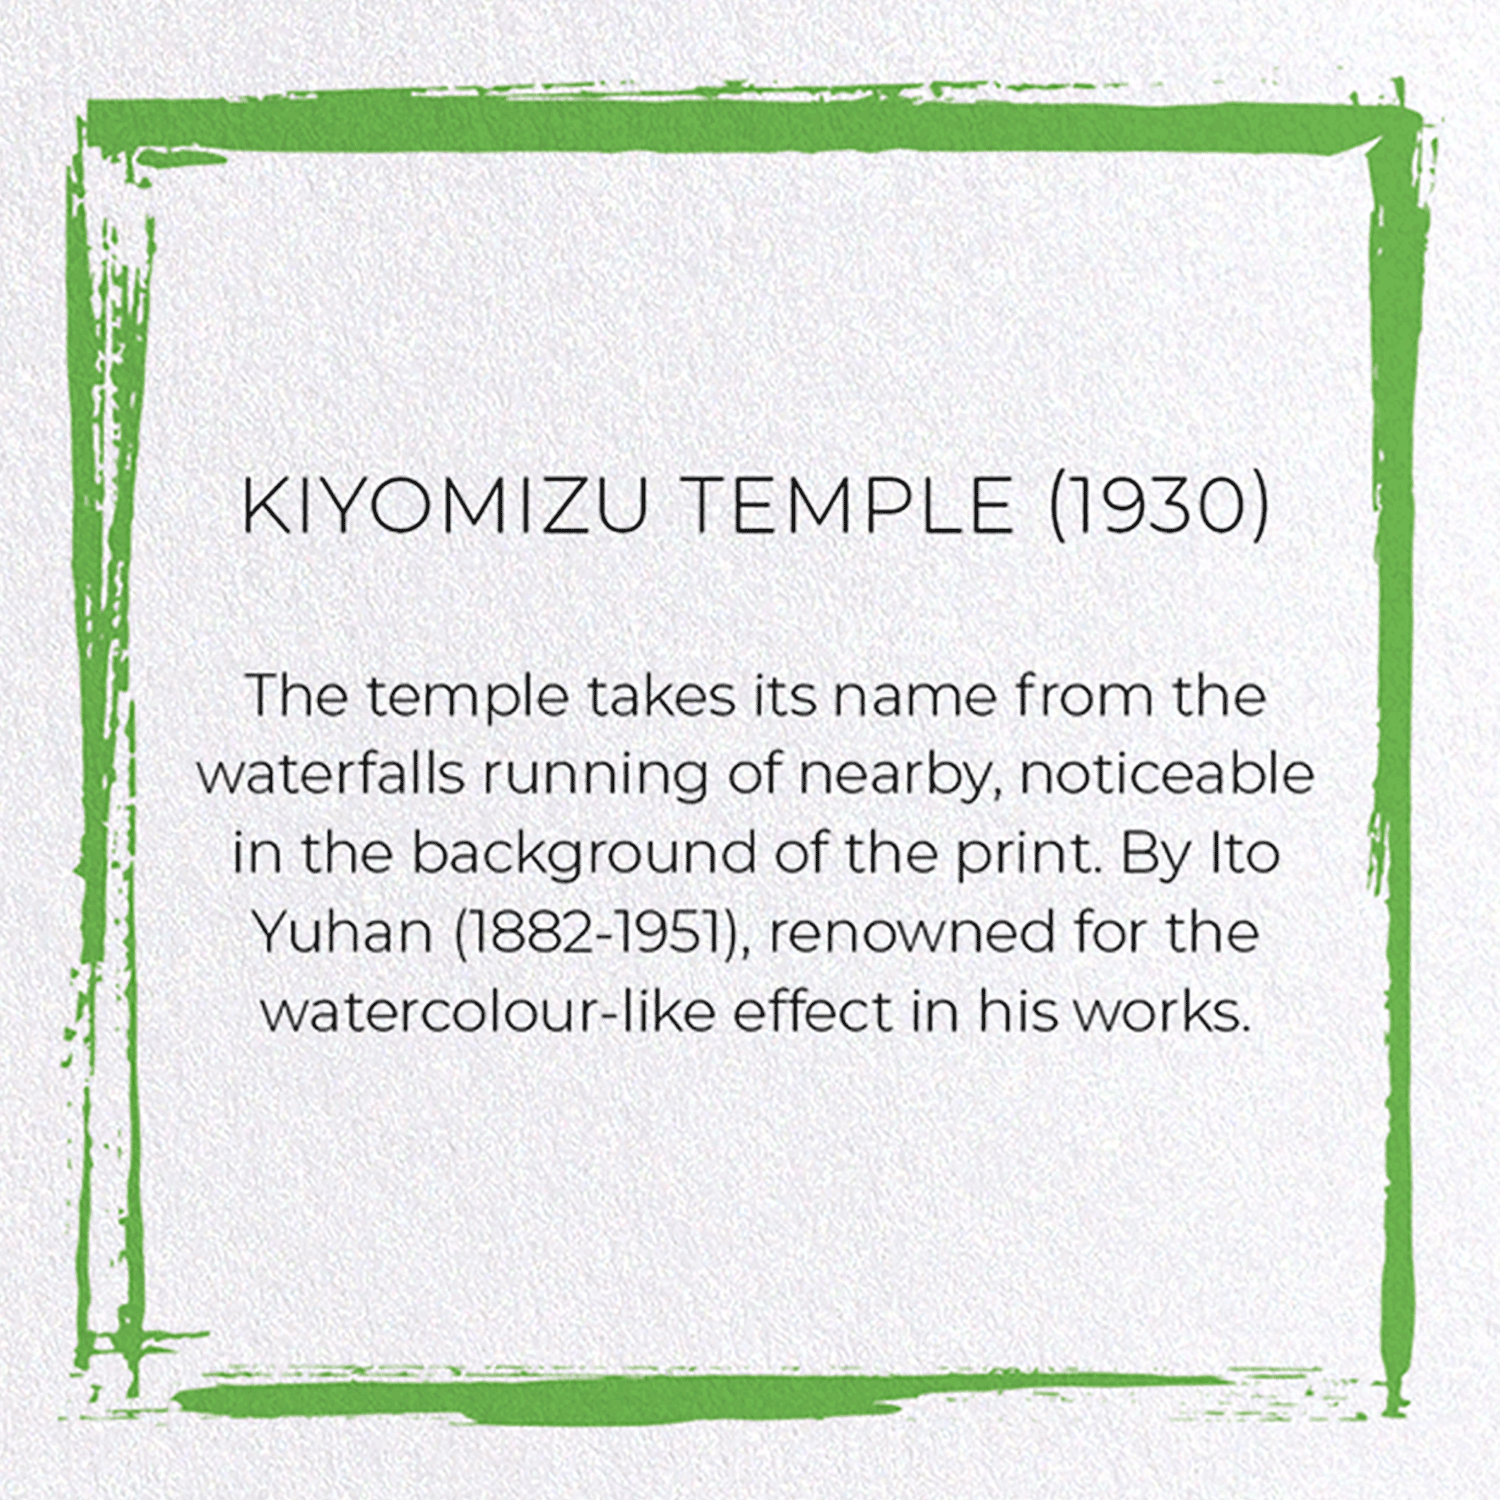 KIYOMIZU TEMPLE (1930)